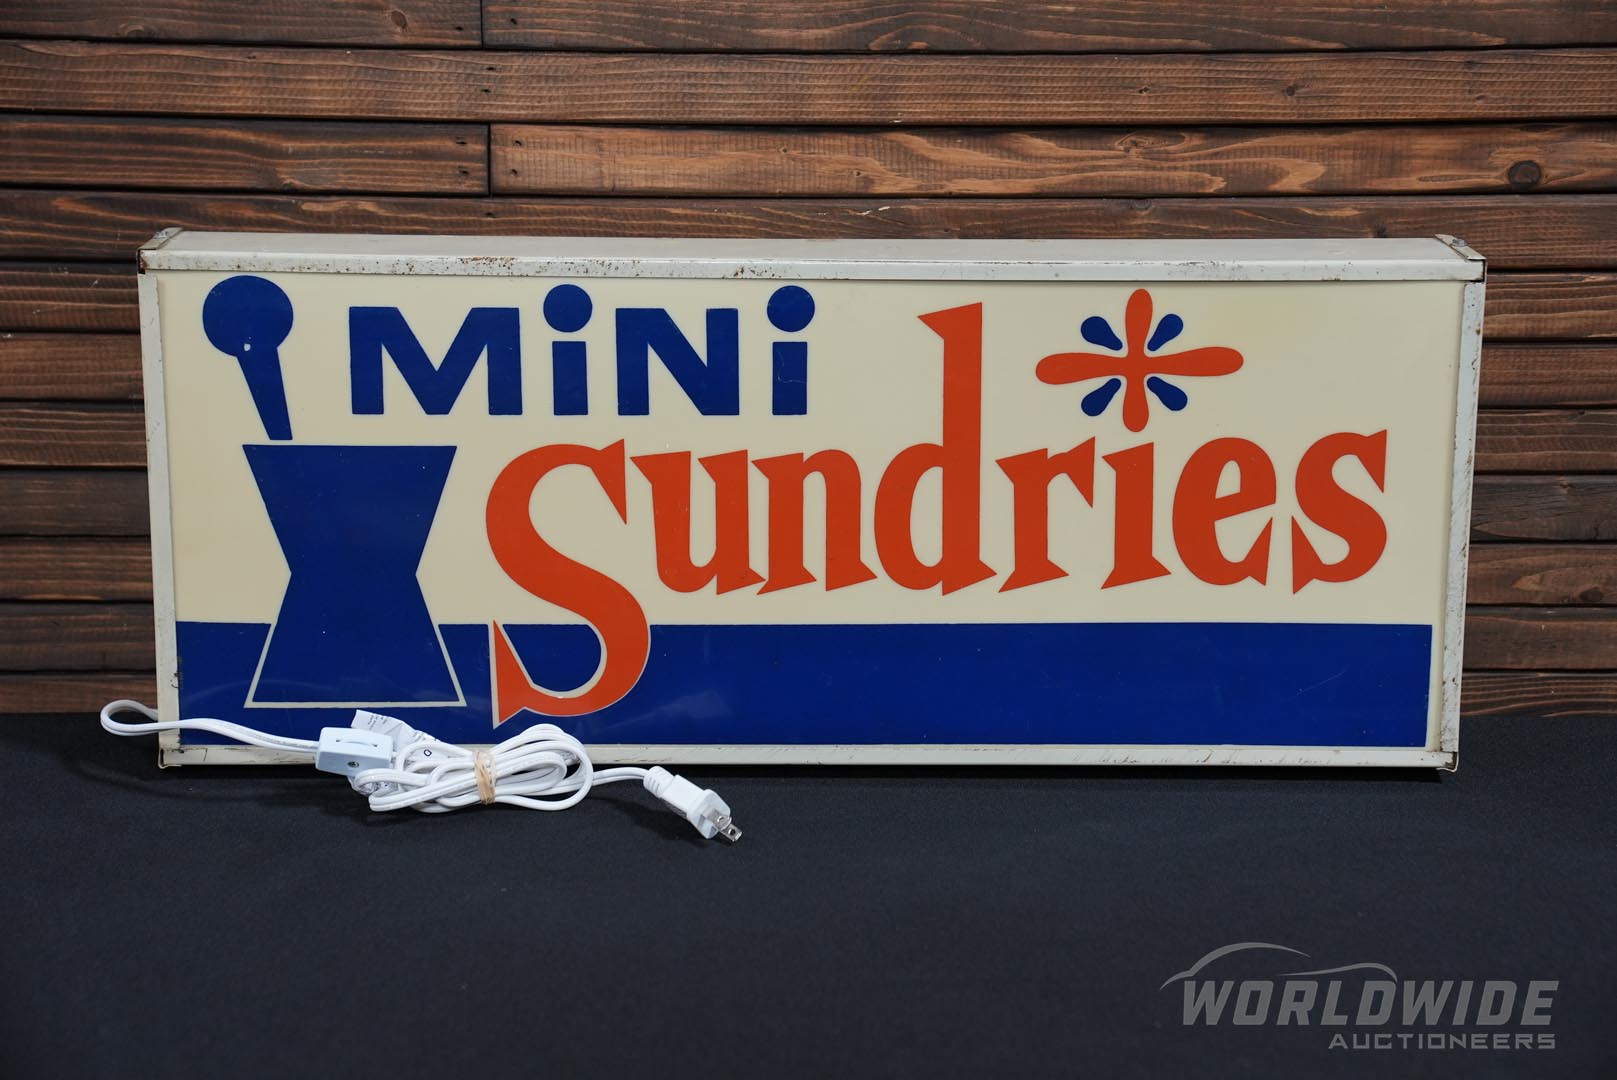  1960s Mini Sundries Lighted Si gn 